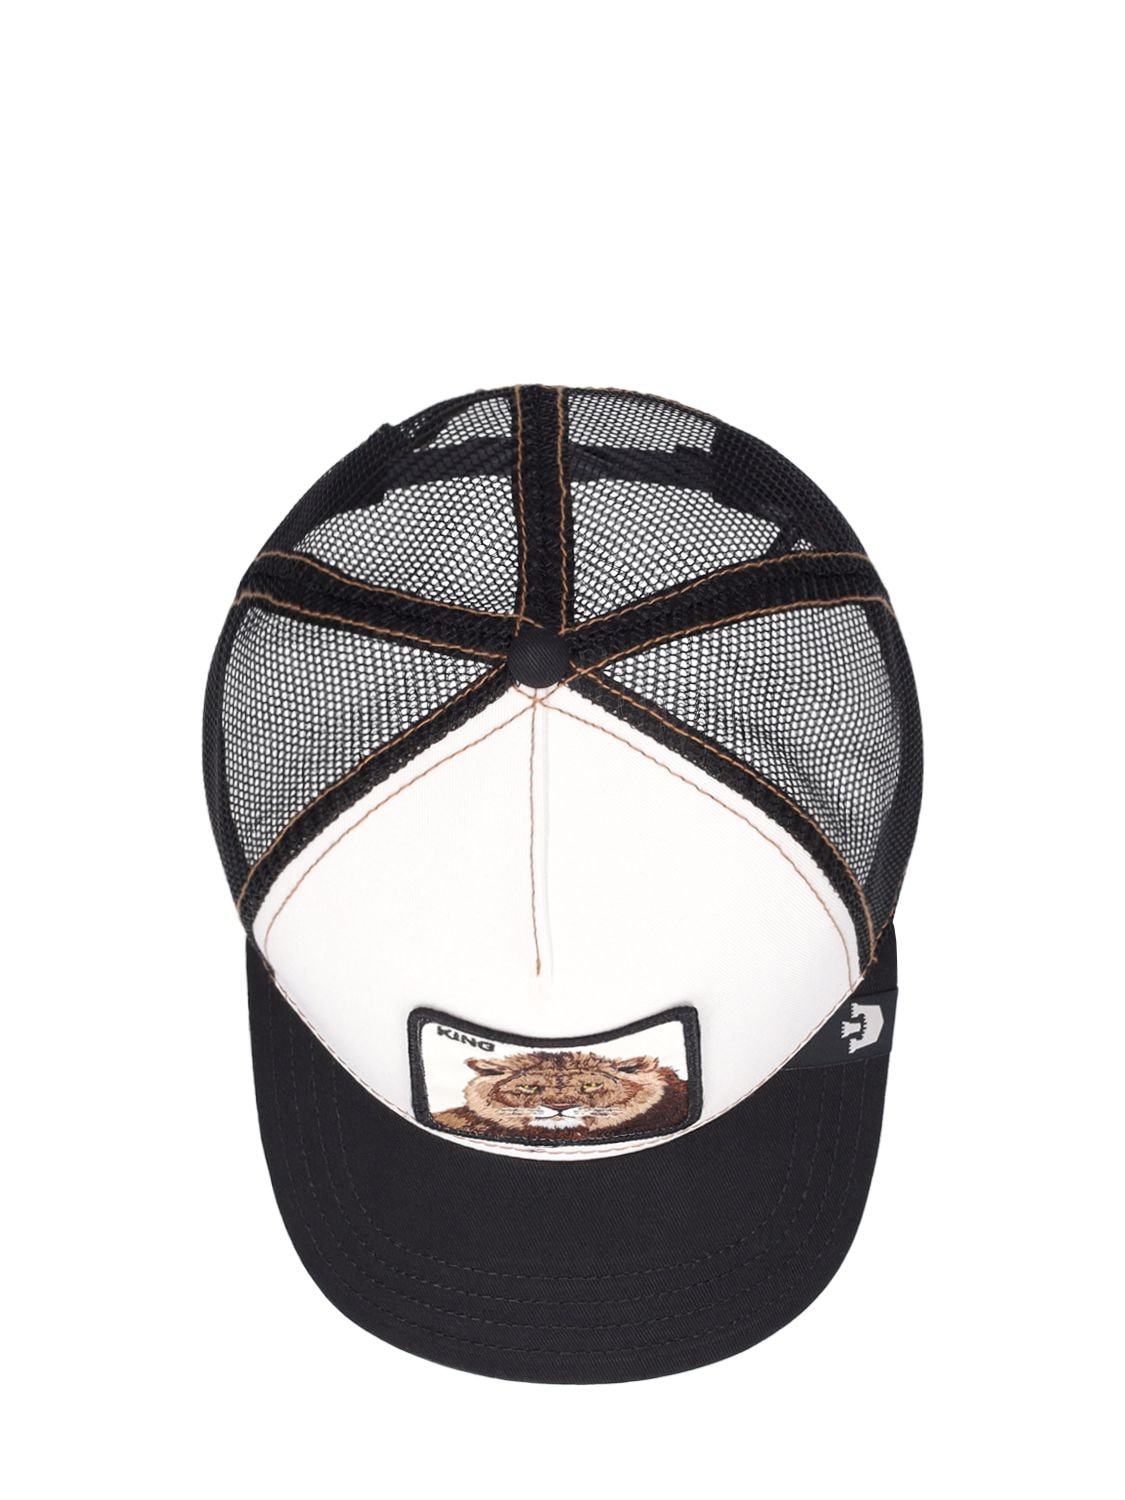 Shop Goorin Bros The Lion King Trucker Hat W/ Patch In Black